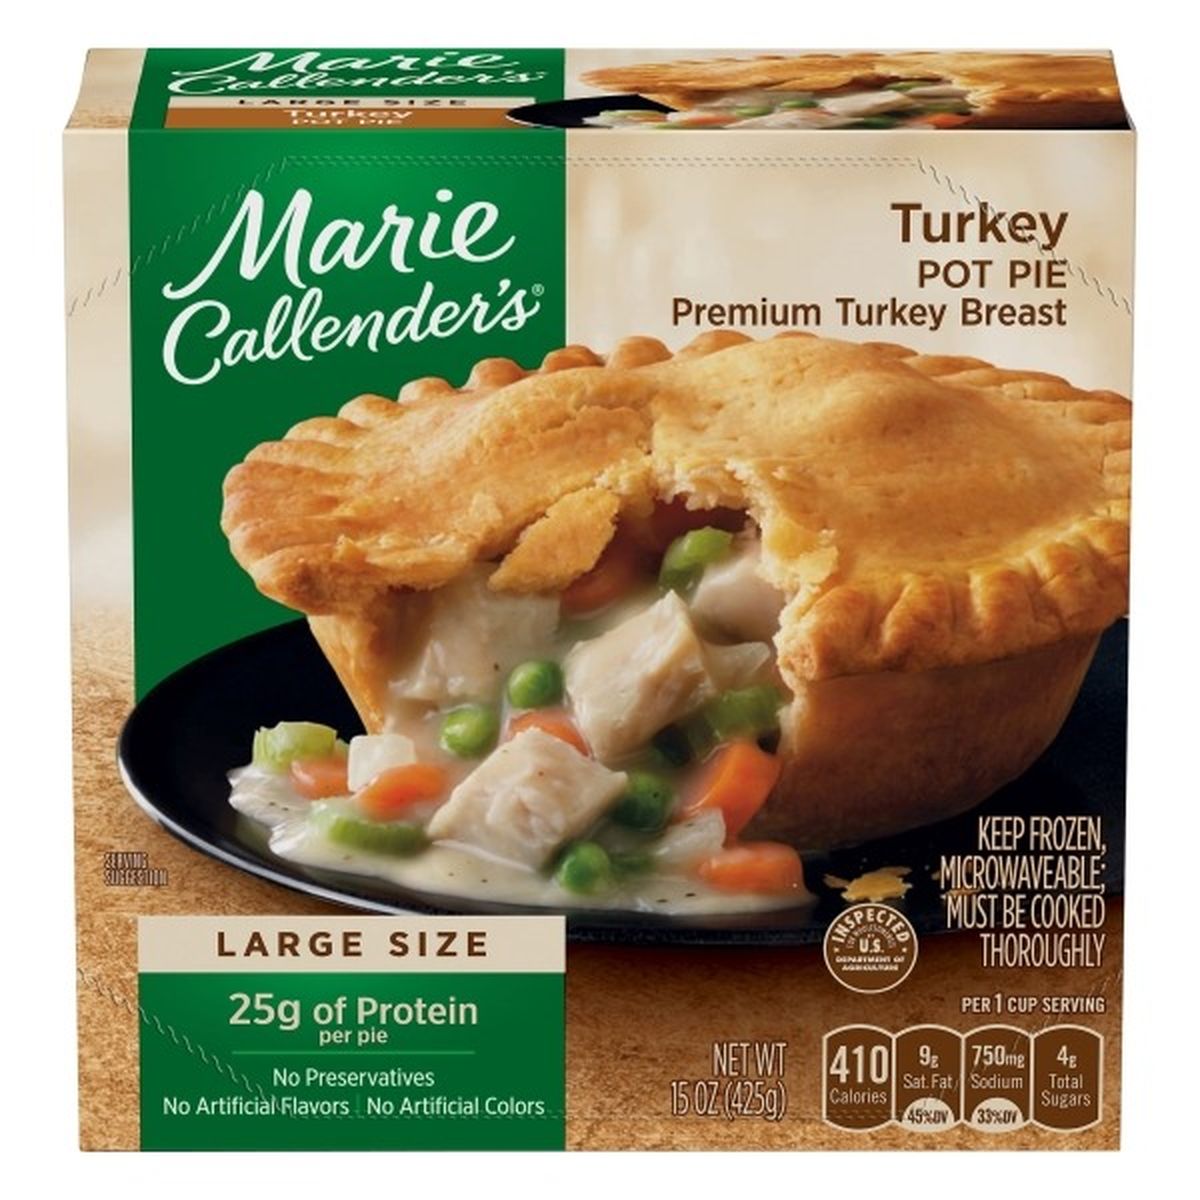 Calories in Marie Callender's Turkey Pot Pie, Large Size